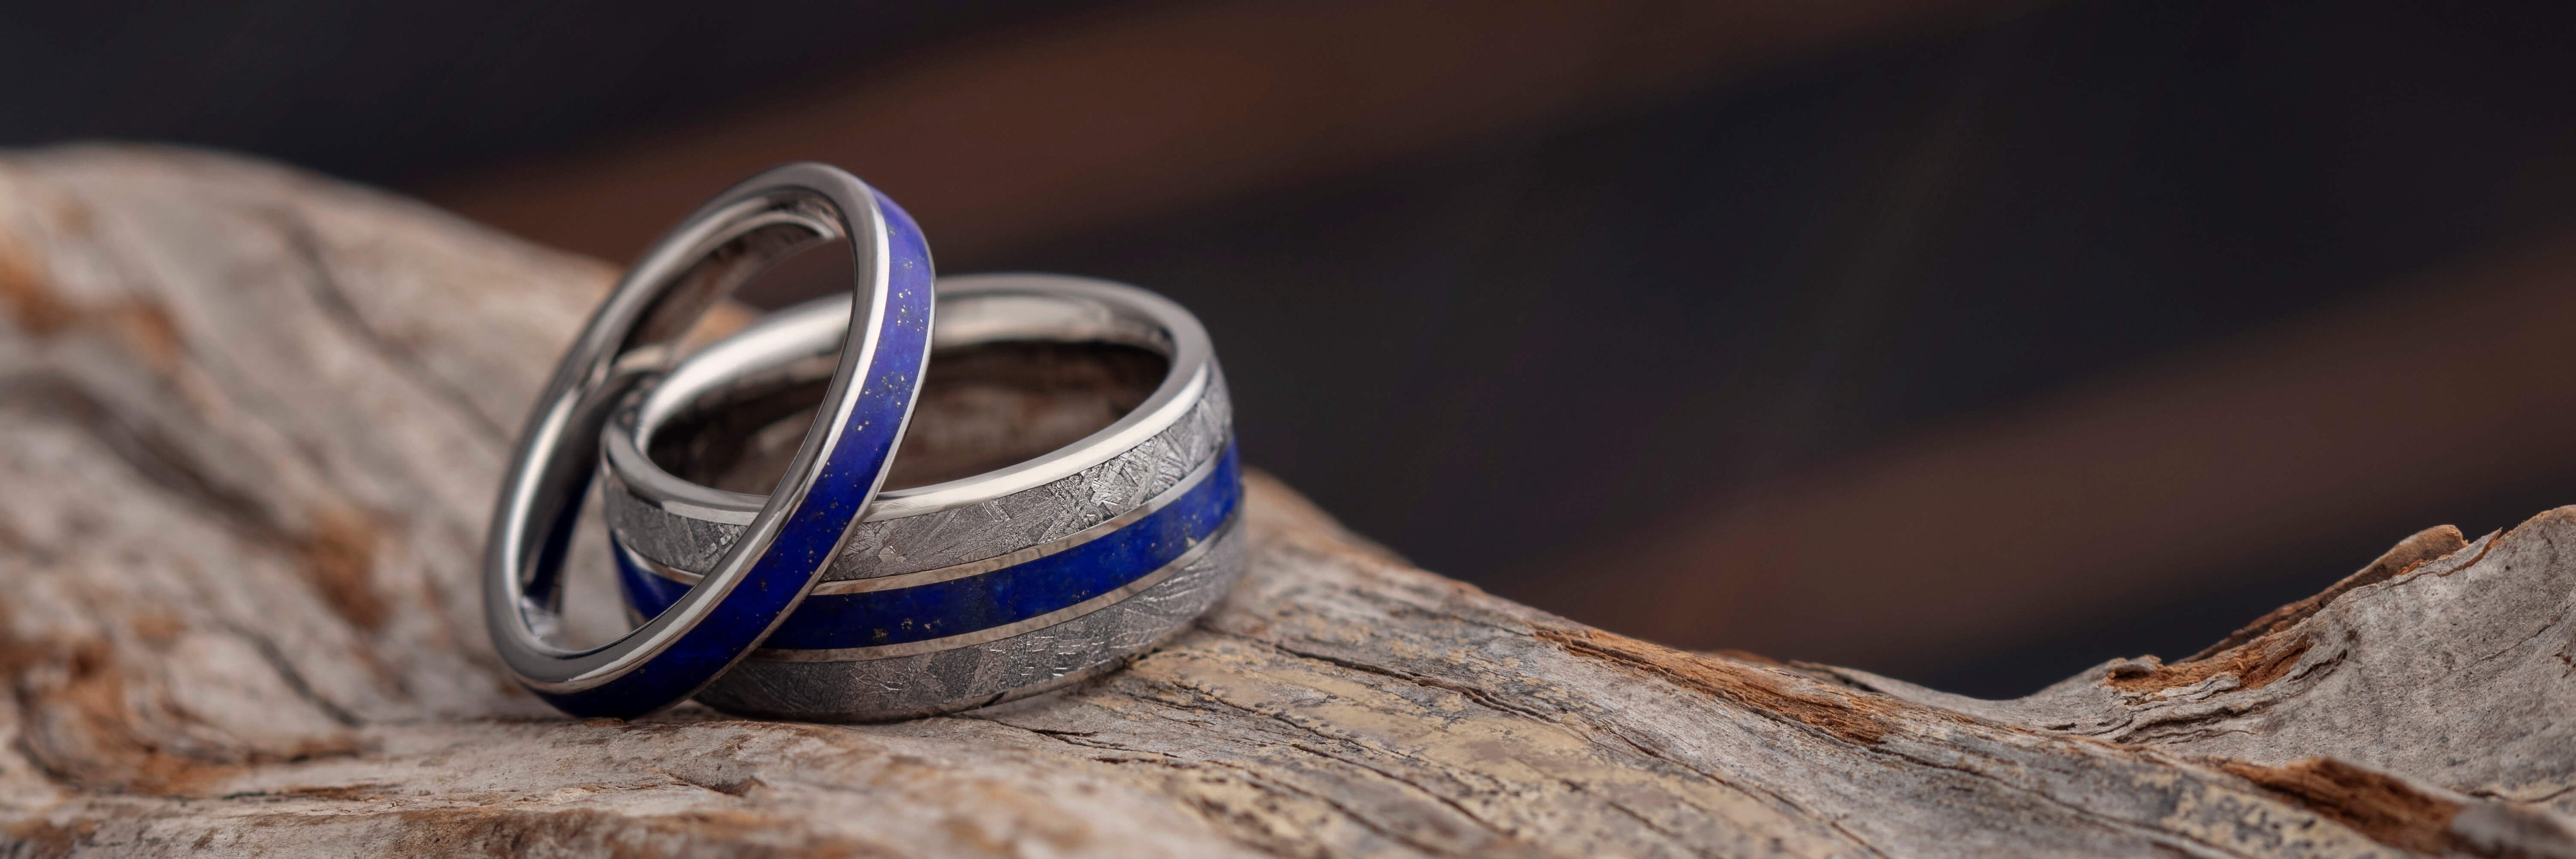 Lapis lazuli wedding bands for men and women